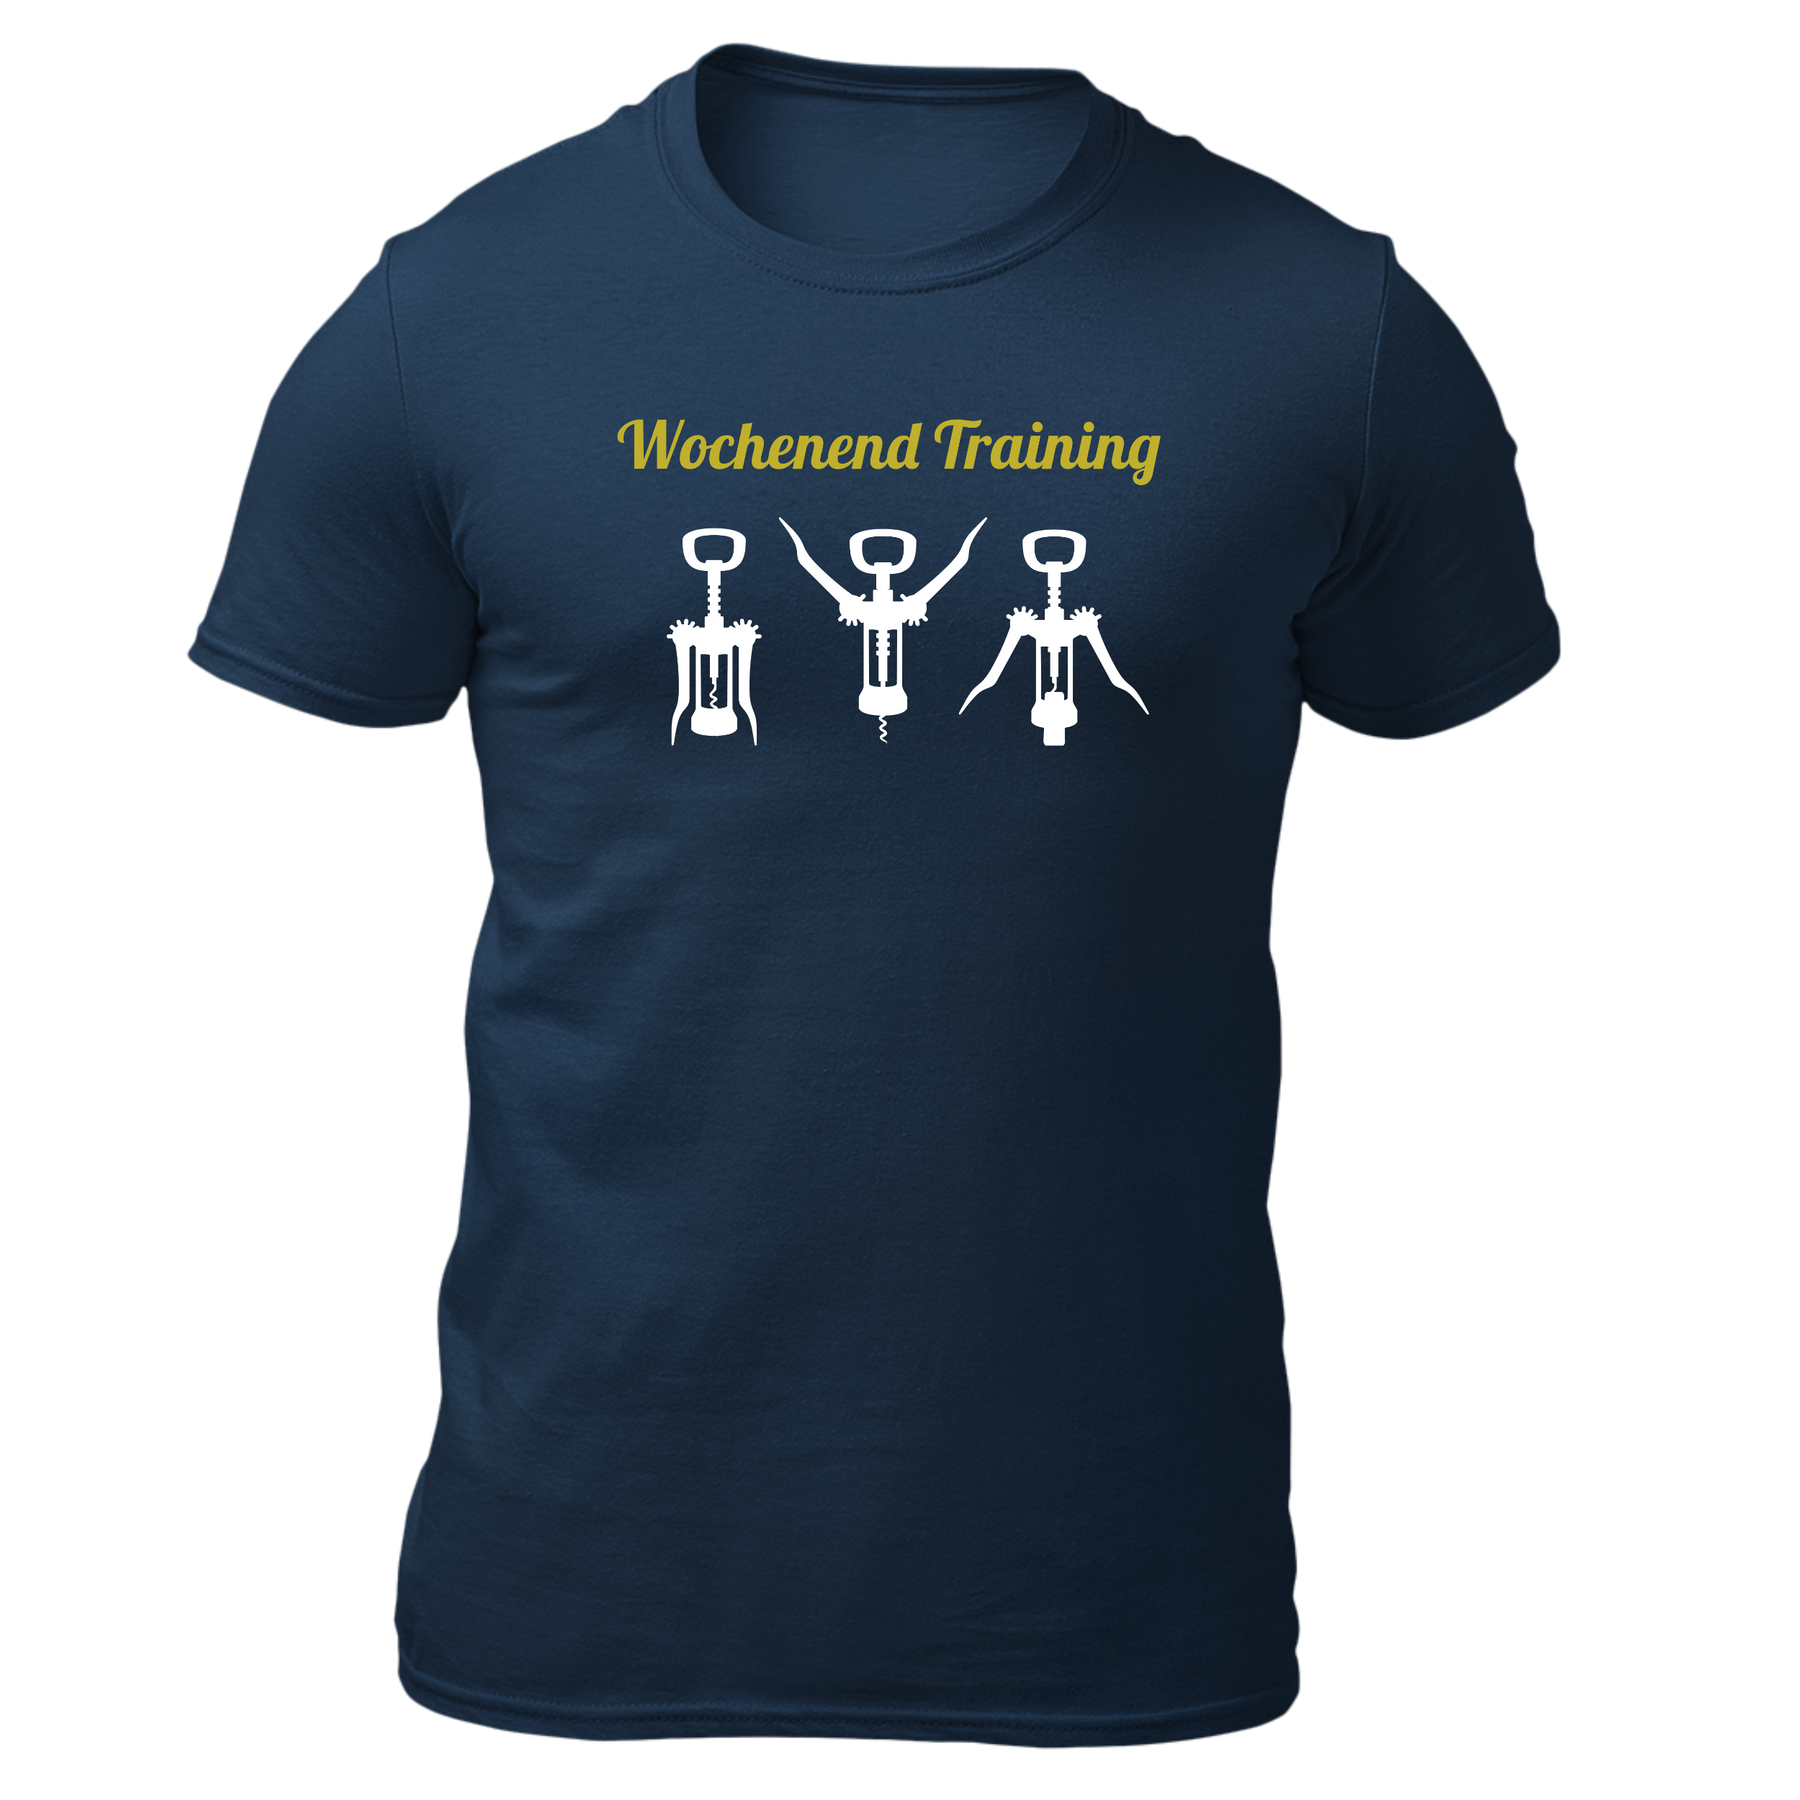 Wochenend Training - Herren Shirt Bio - Navy / S - Shirts & Tops